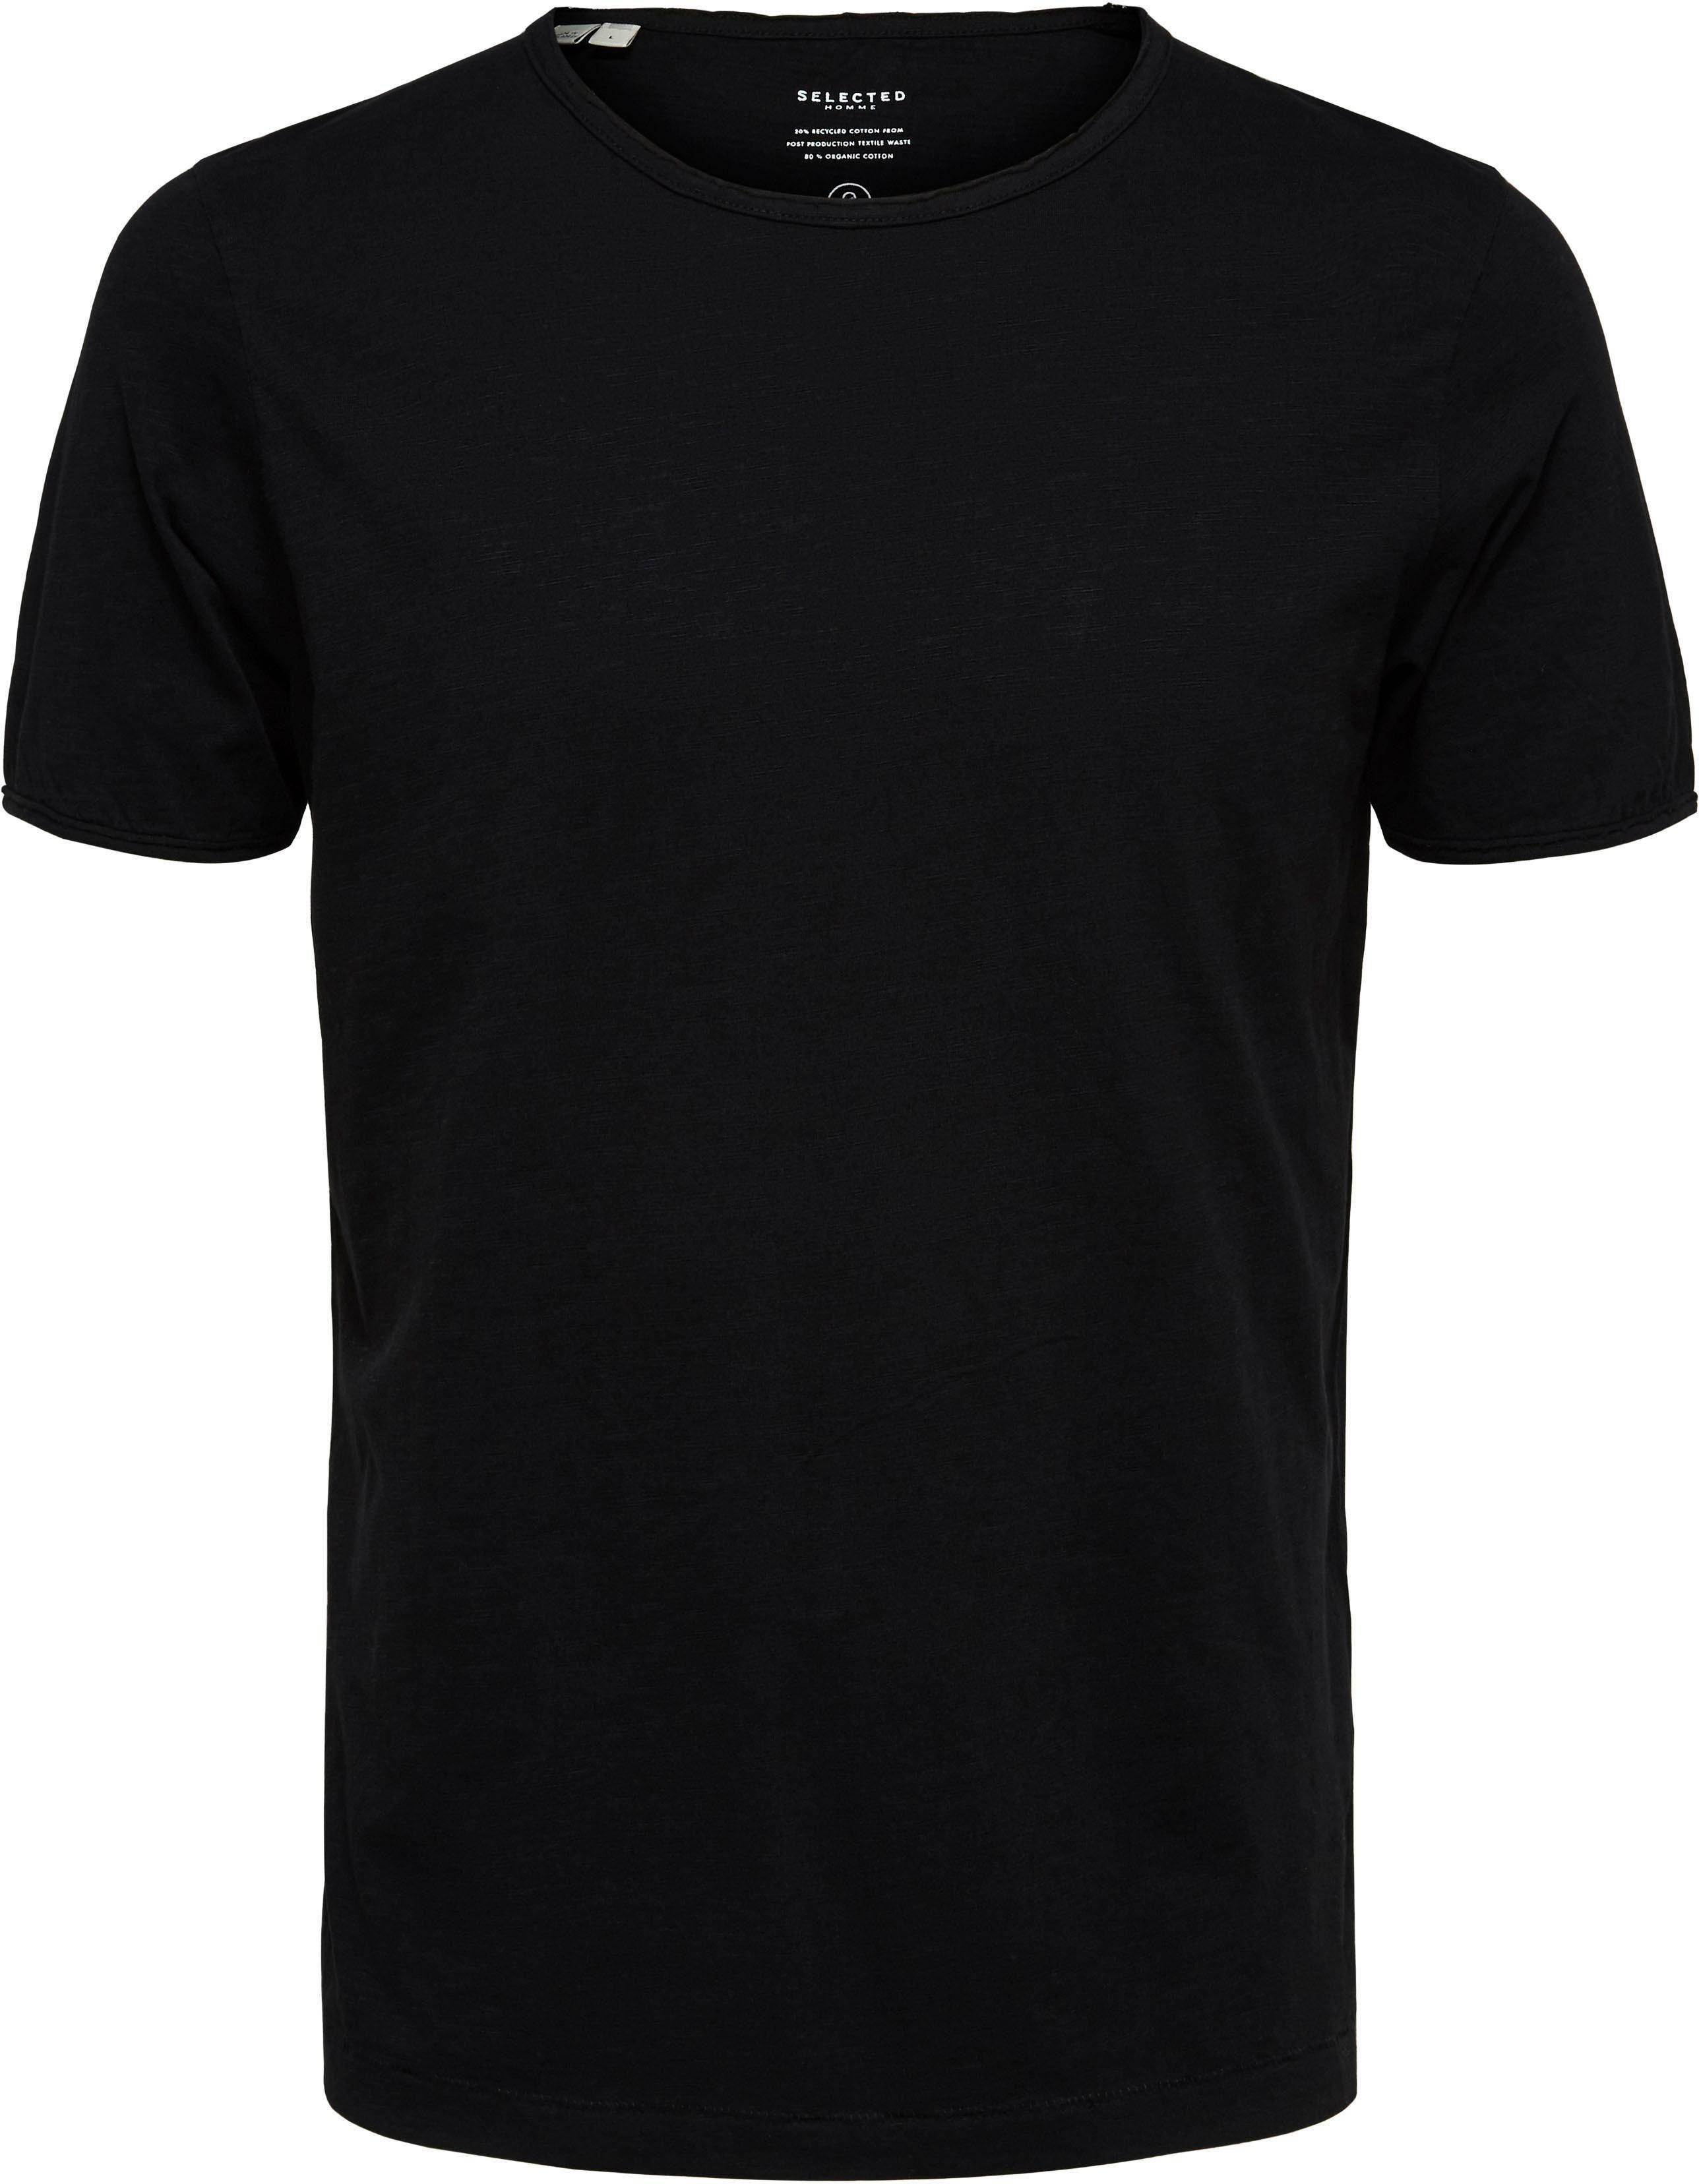 SELECTED HOMME T-Shirt MORGAN O-NECK Black TEE